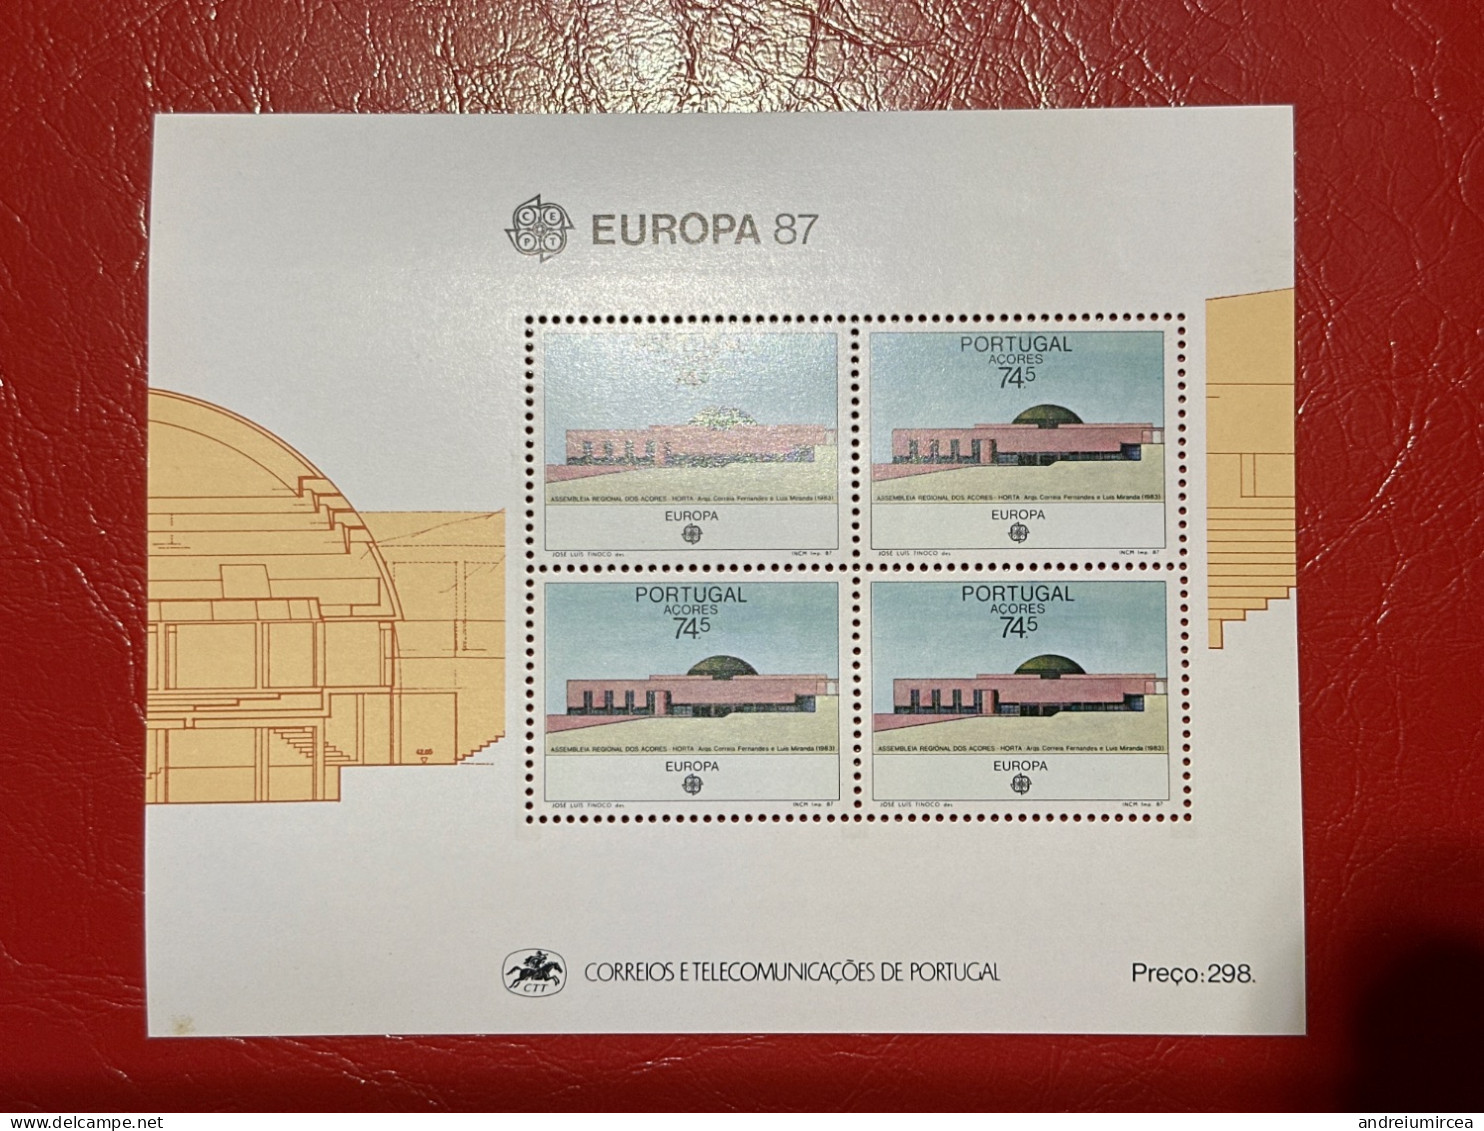 Europa CEPT 1987MNH Portugal Acores Madeira - 1987